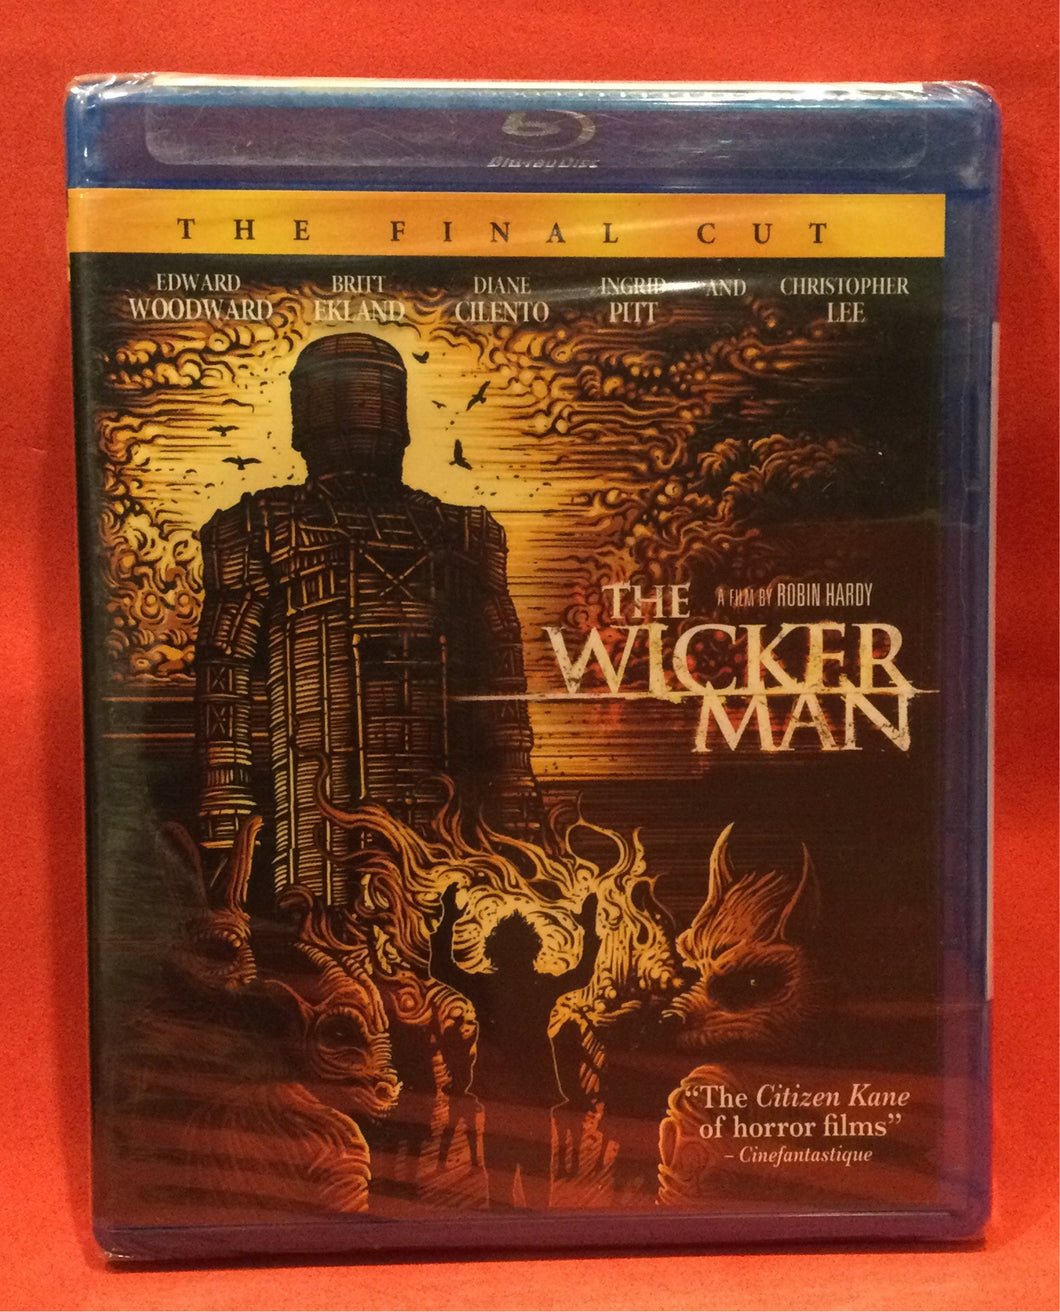 WICKER MAN, THE - BLU-RAY DVD (SEALED)